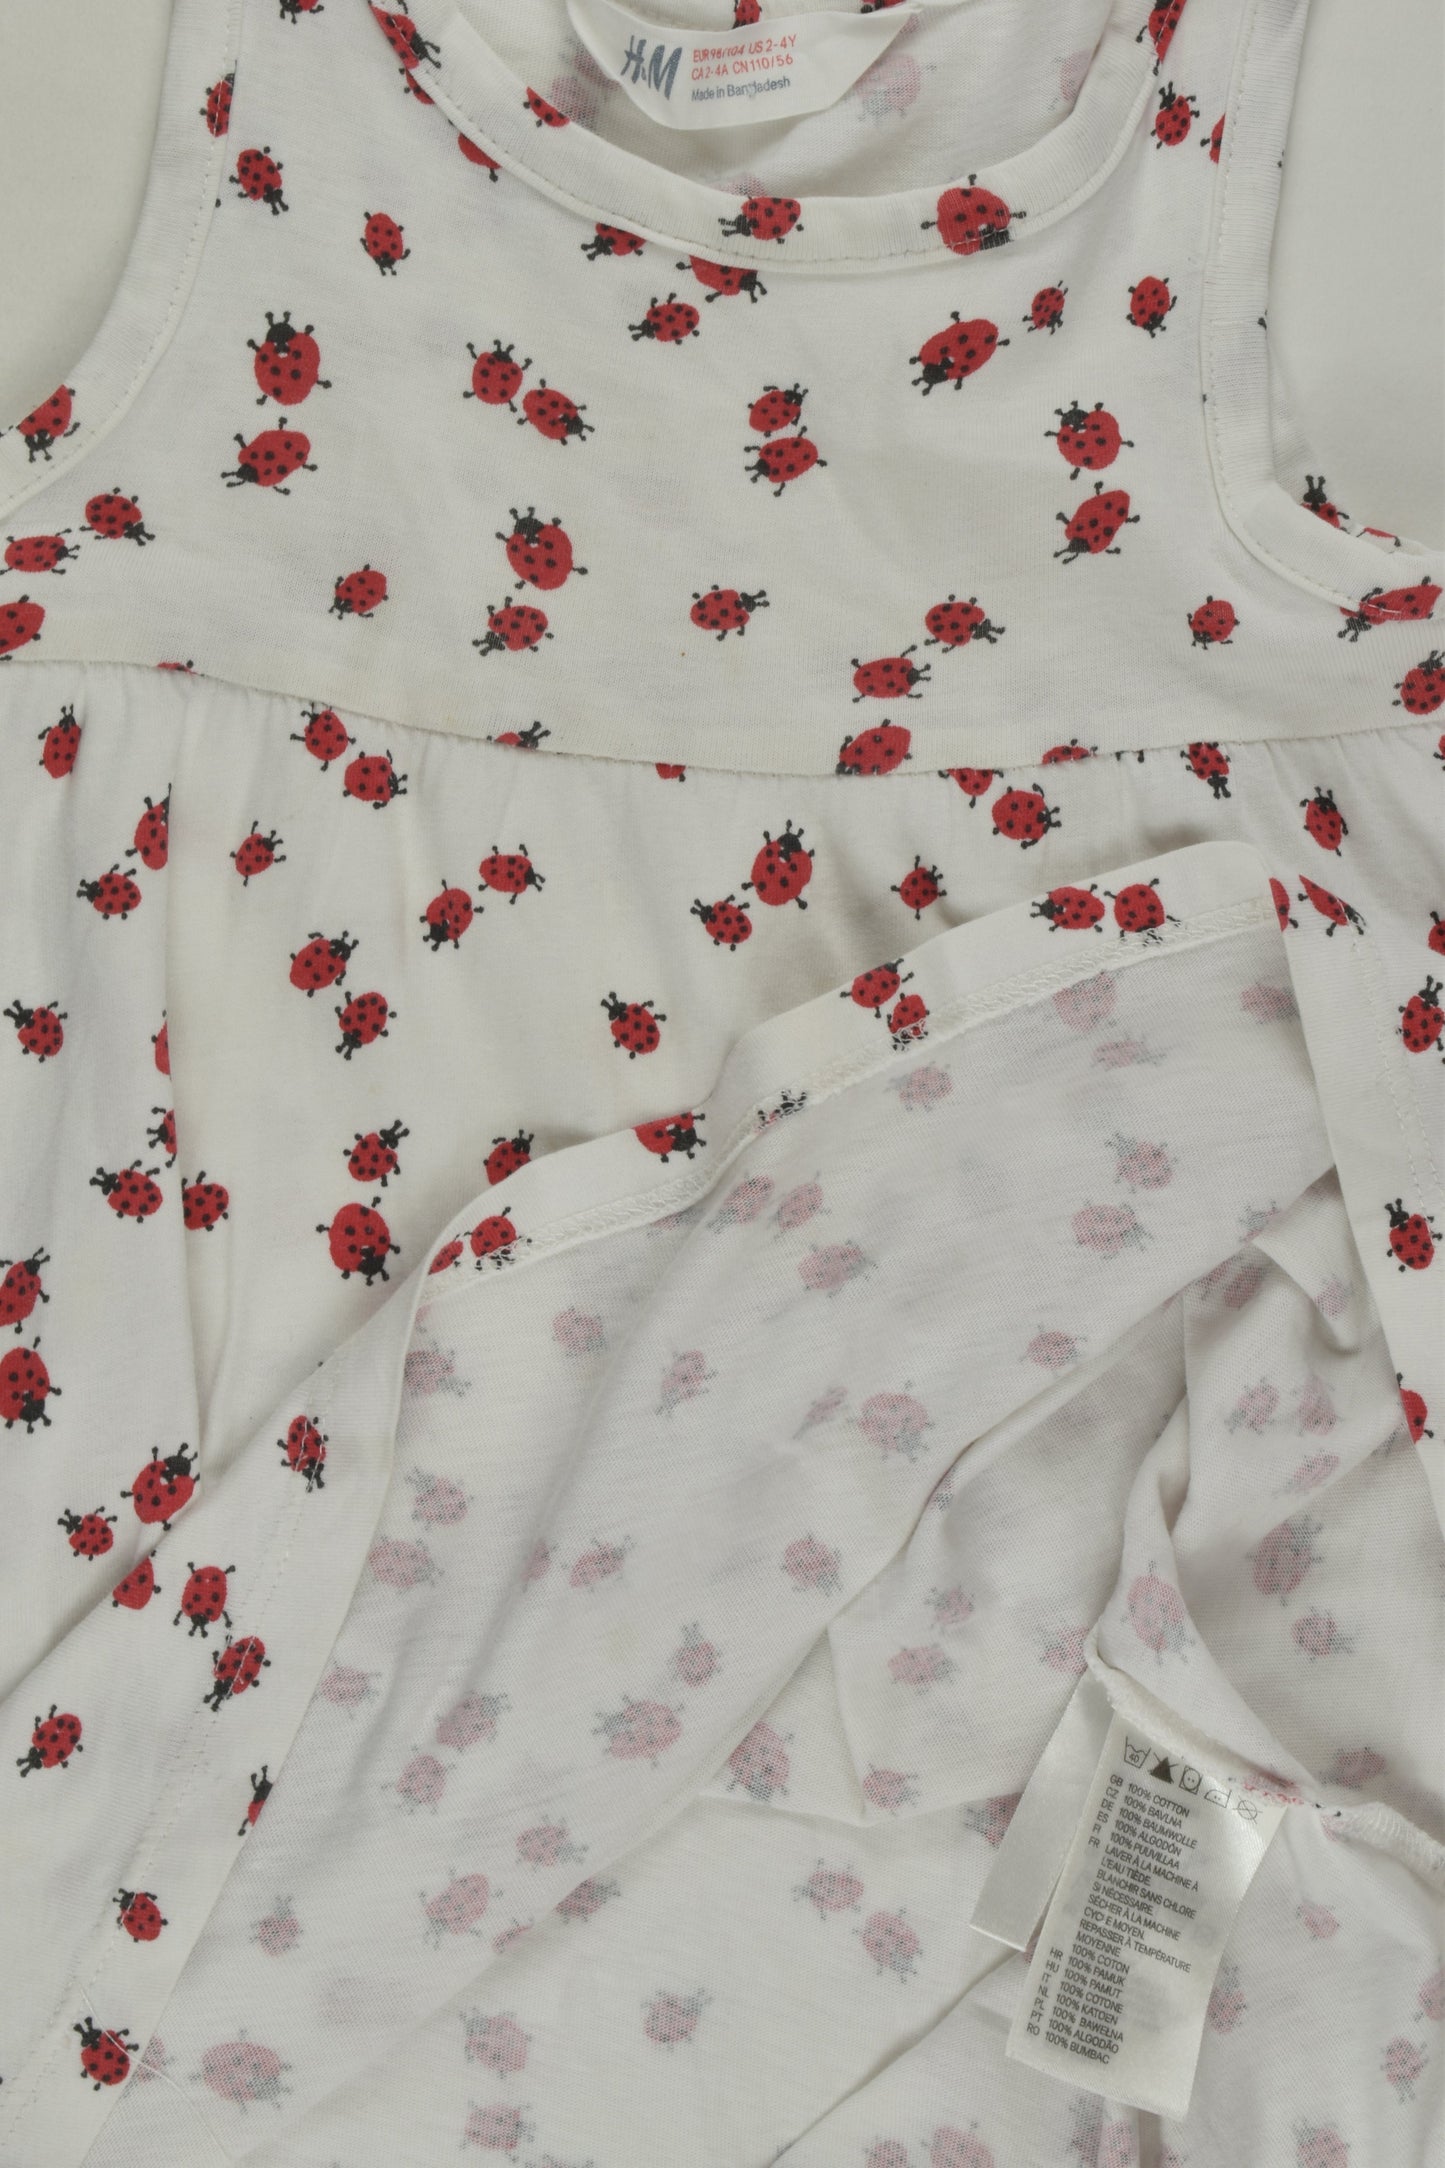 H&M Size 3-4 (98/104 cm) Ladybug Dress